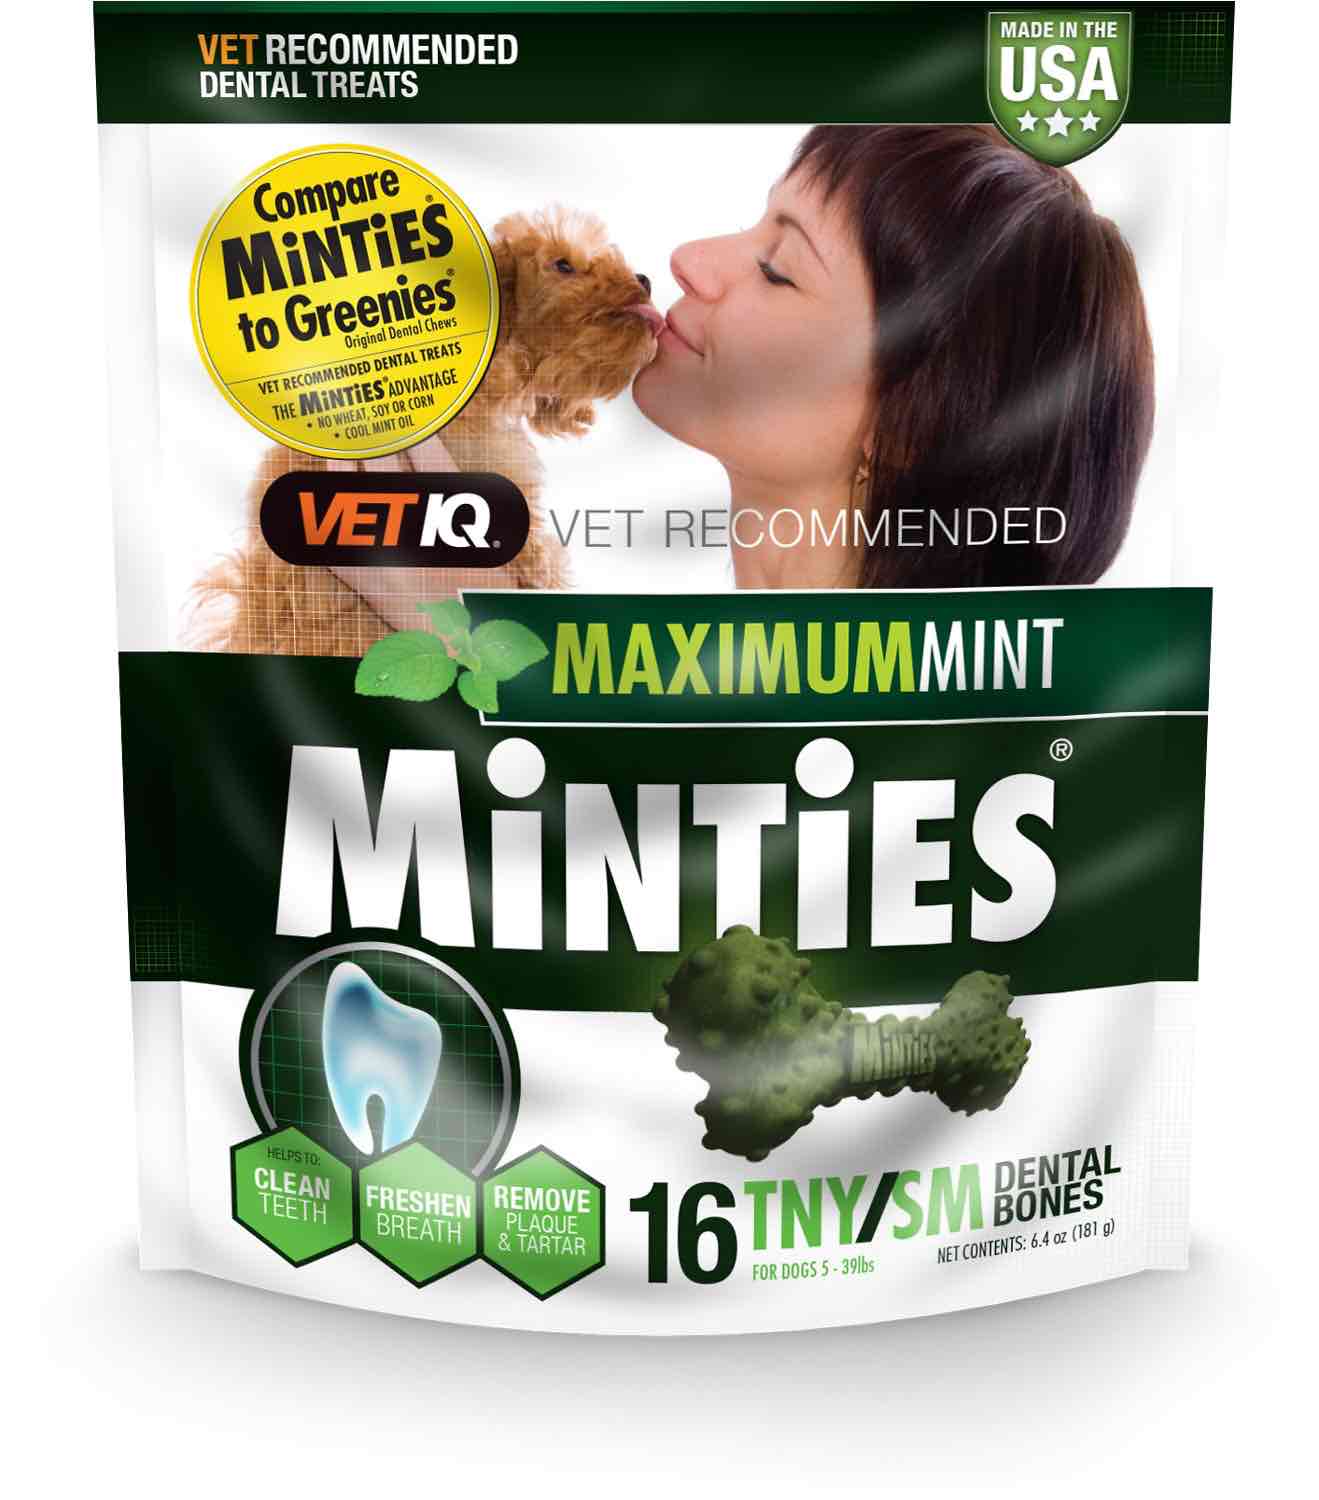 VetIQ Minties Tiny/Small for dogs 5-39 lbs 16 dental bones 1